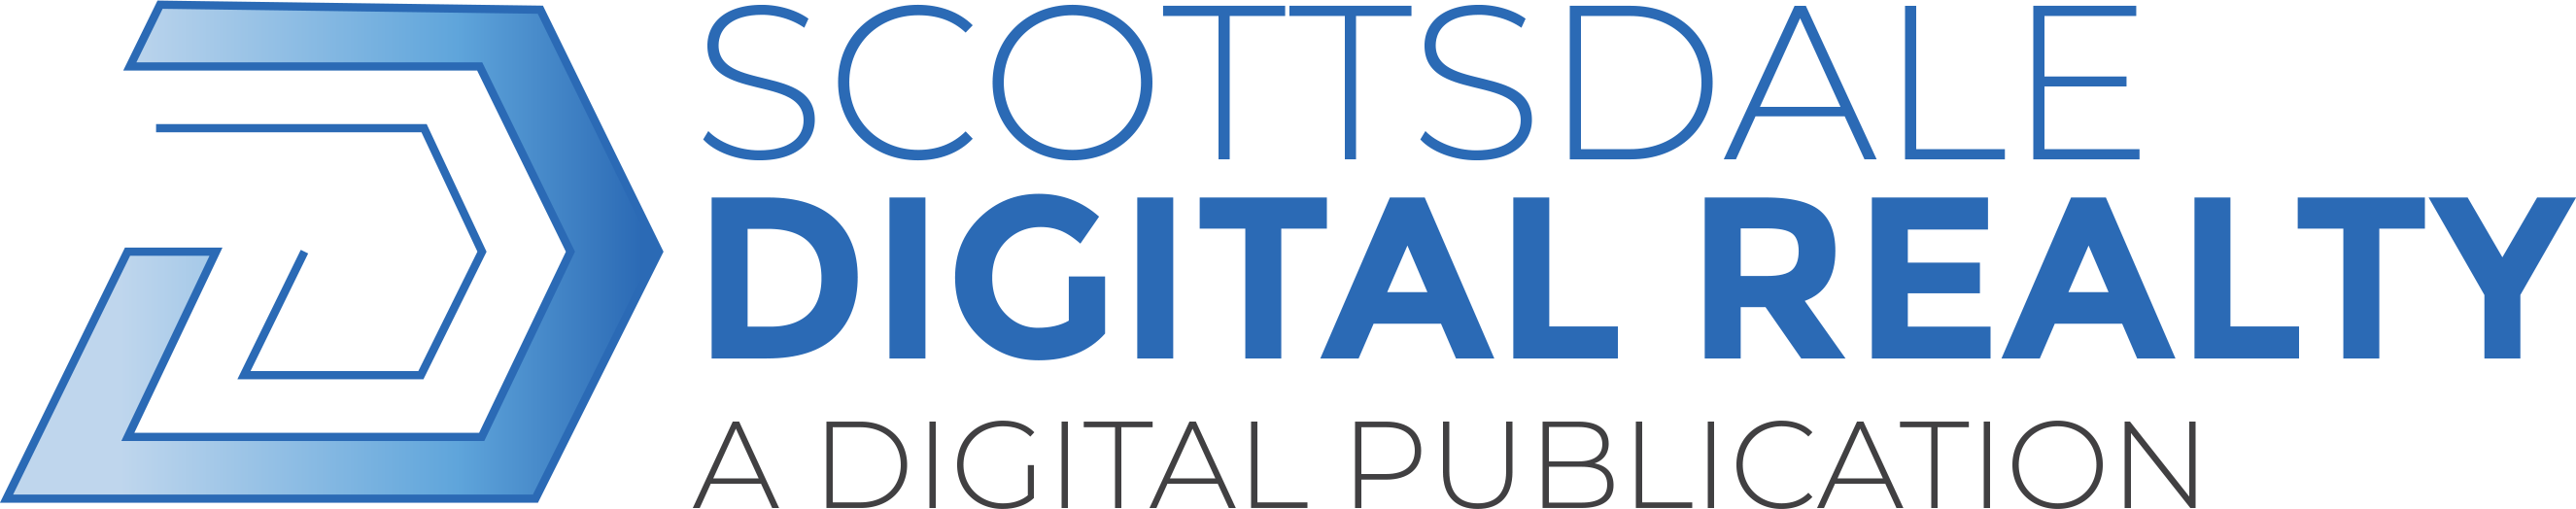 Scottsdale Digital Realty Logo